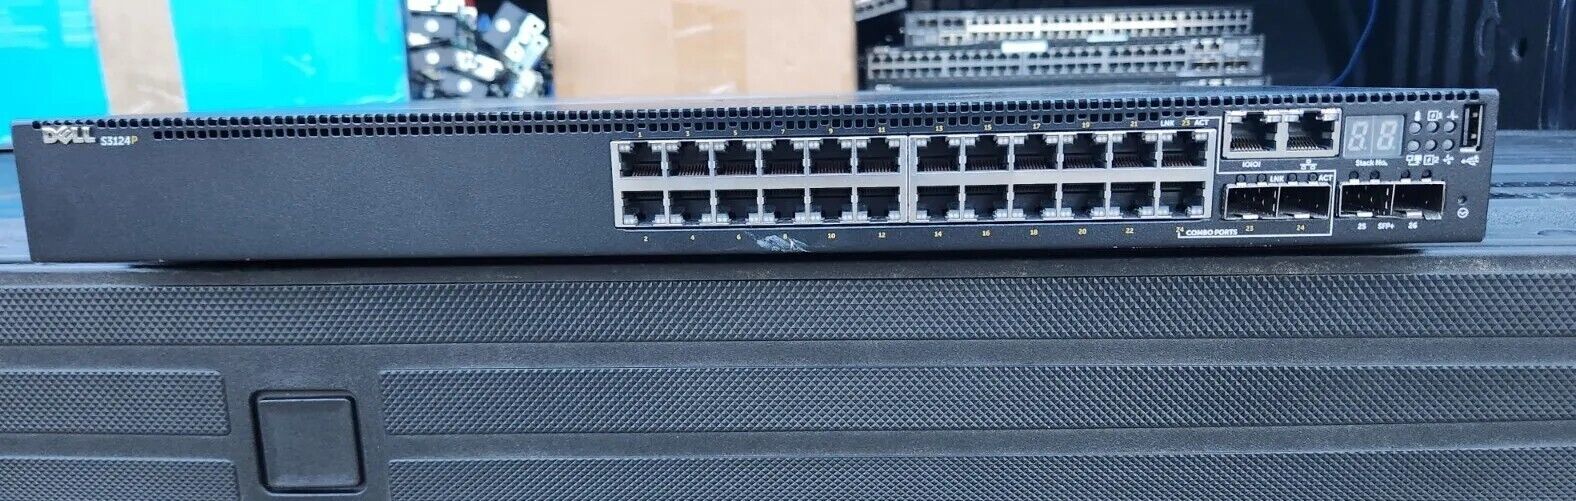 DELL S3124P Networking EMC 24 Port Network Switch 2x SFP+ 2x 715W PSU